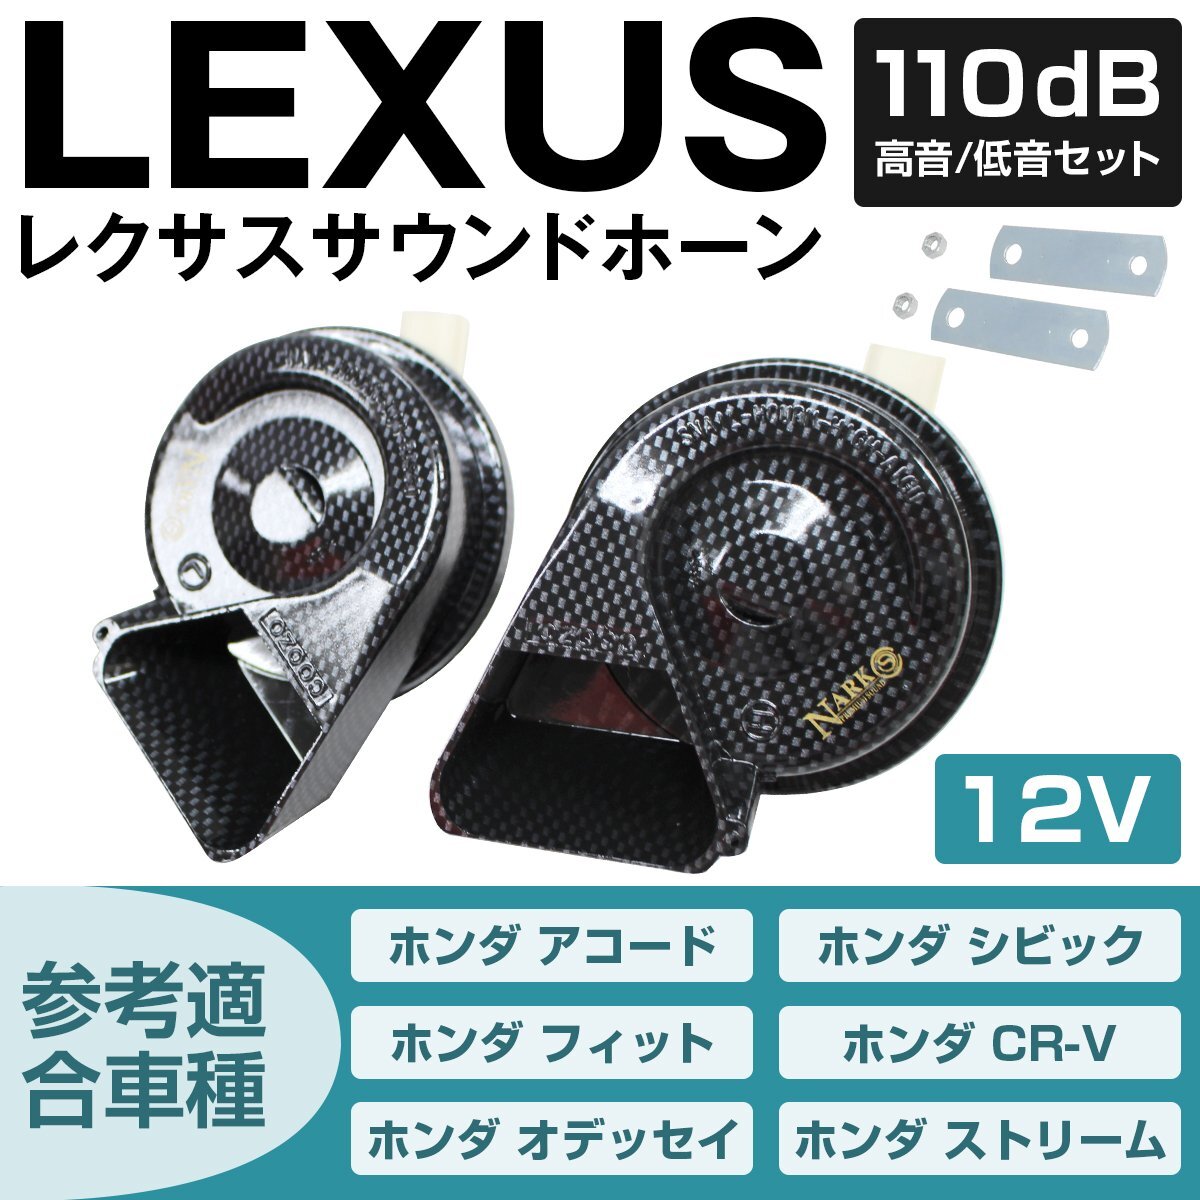  Honda car coupler design Lexus sound horn height sound low sound 110db 2 piece Fit Odyssey CR-V N box carbon style 